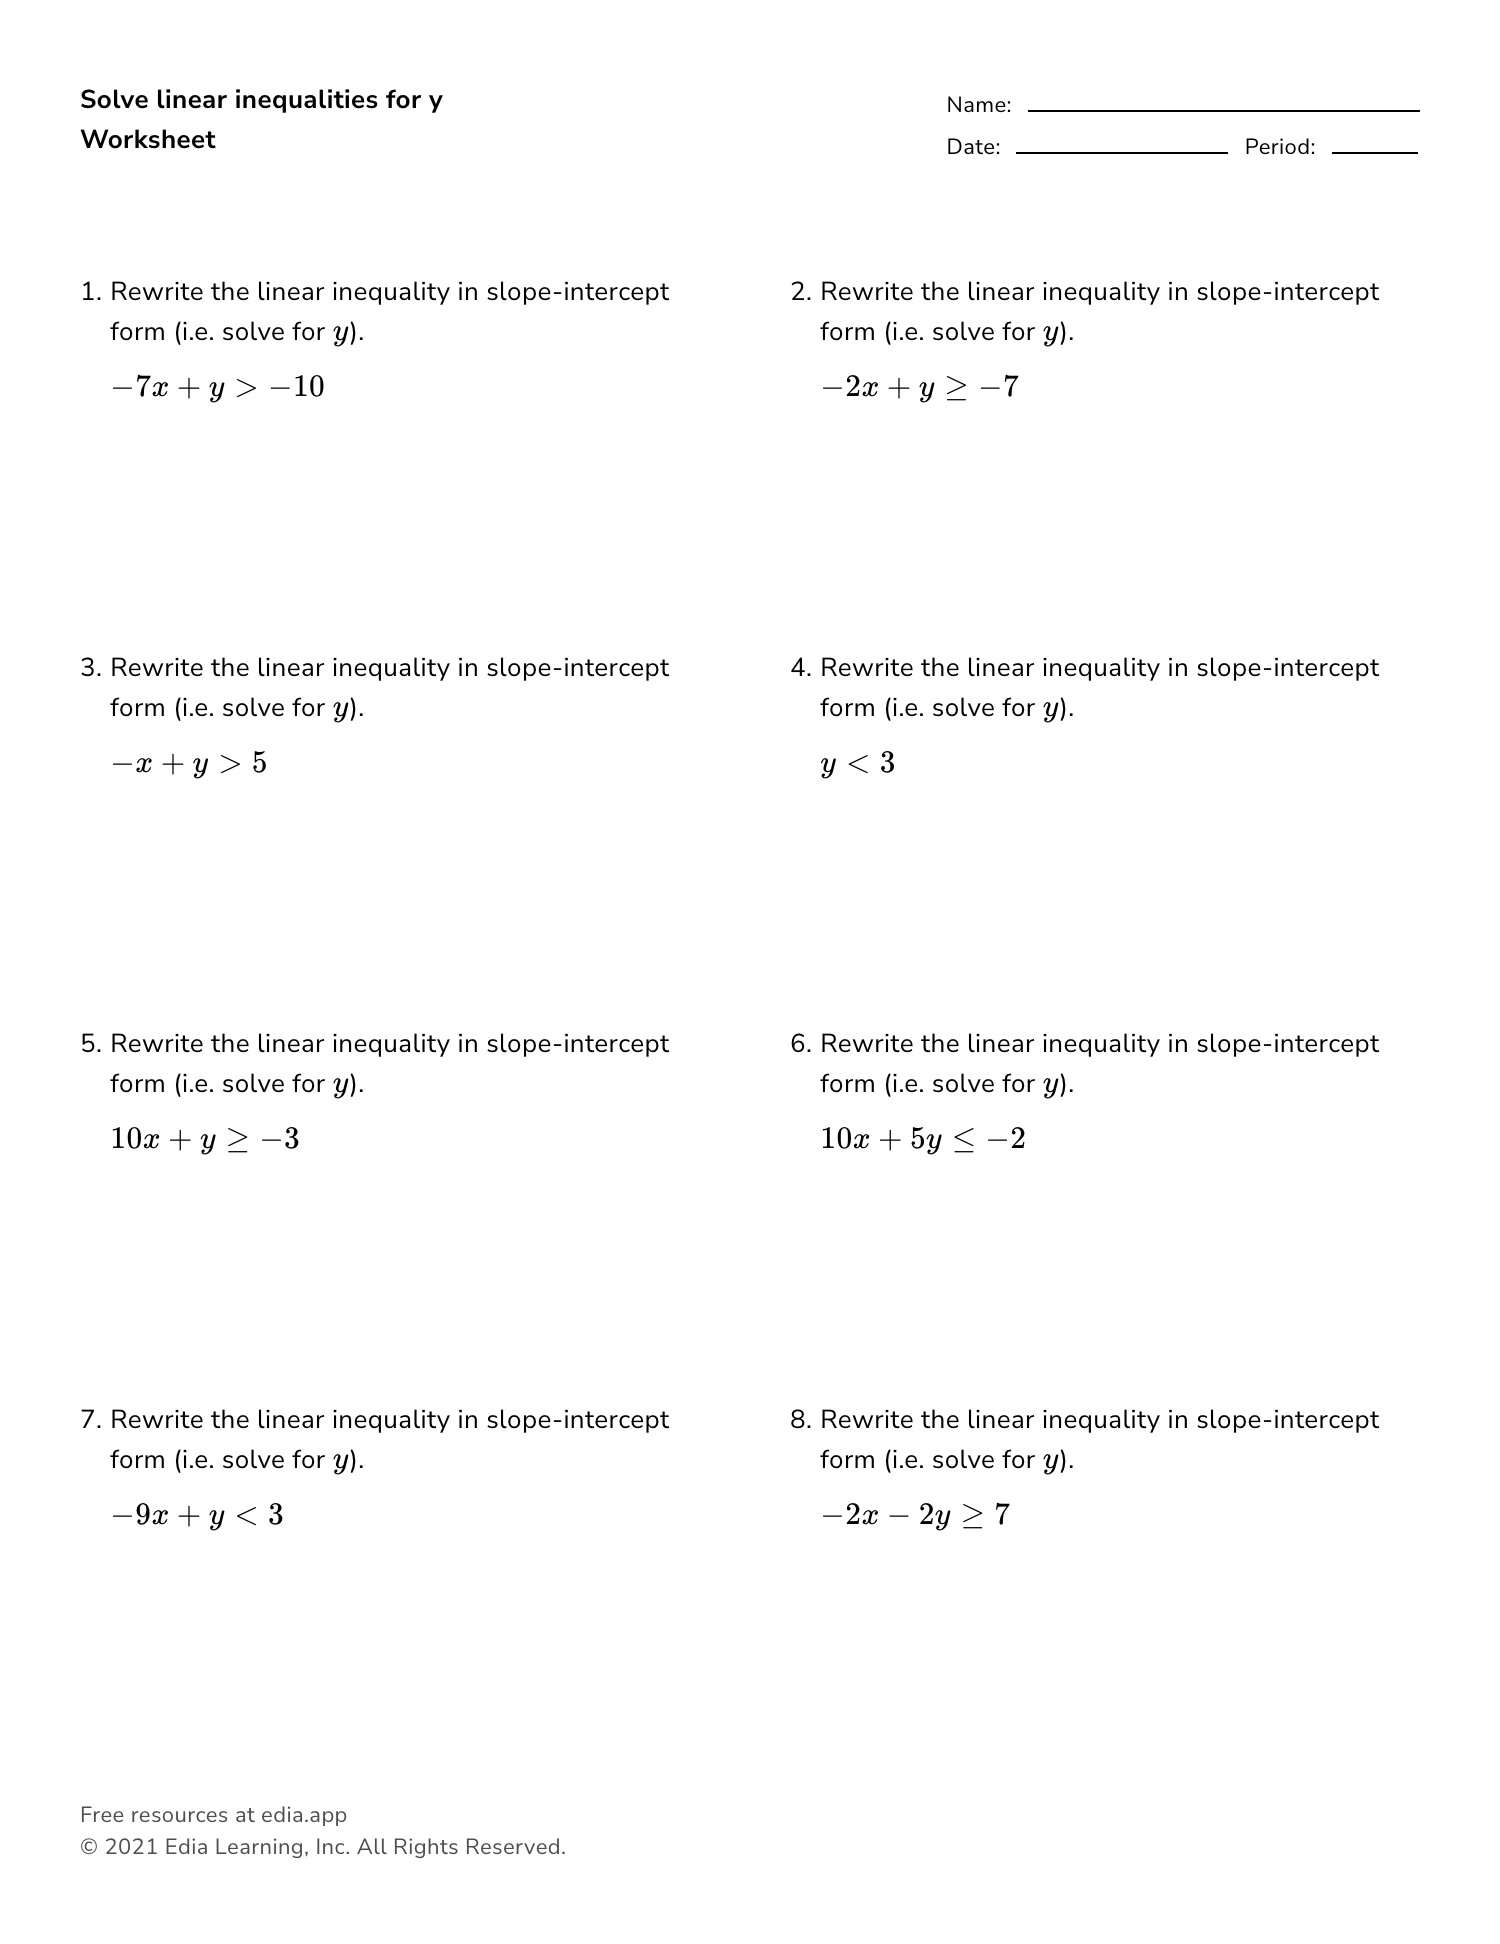 Solve Linear Inequalities For Y - Worksheet For Solving For Y Worksheet